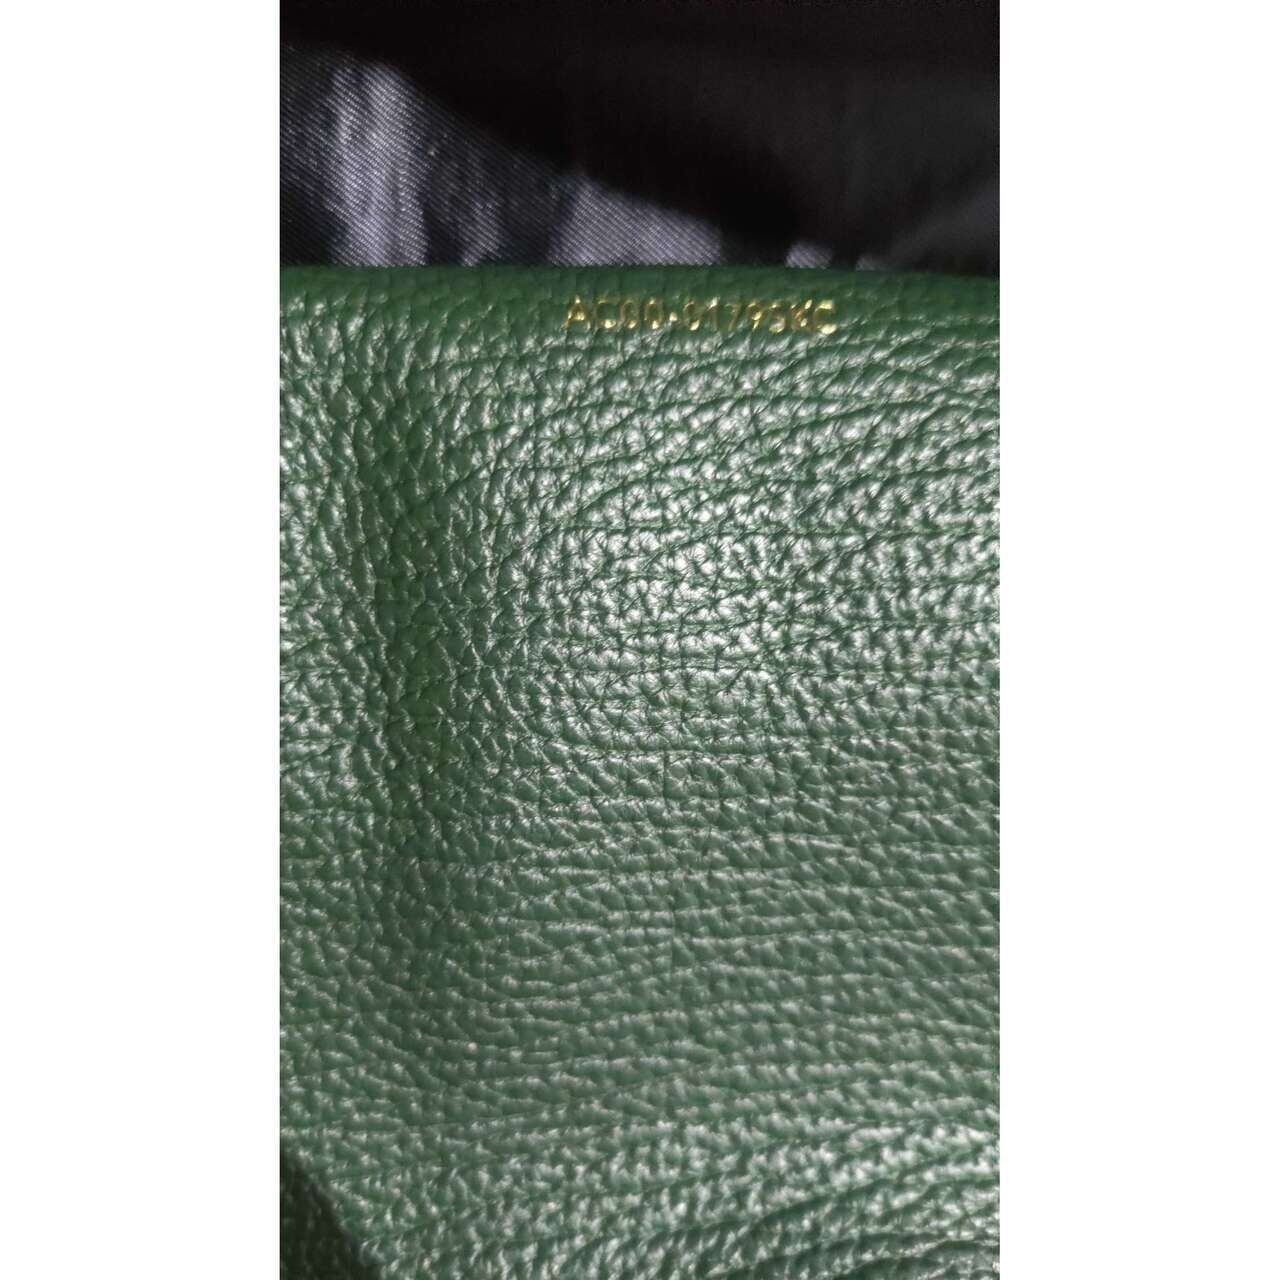 3.1 Phillip Lim Pashli Medium Green Textured Calfskin Sling Bag